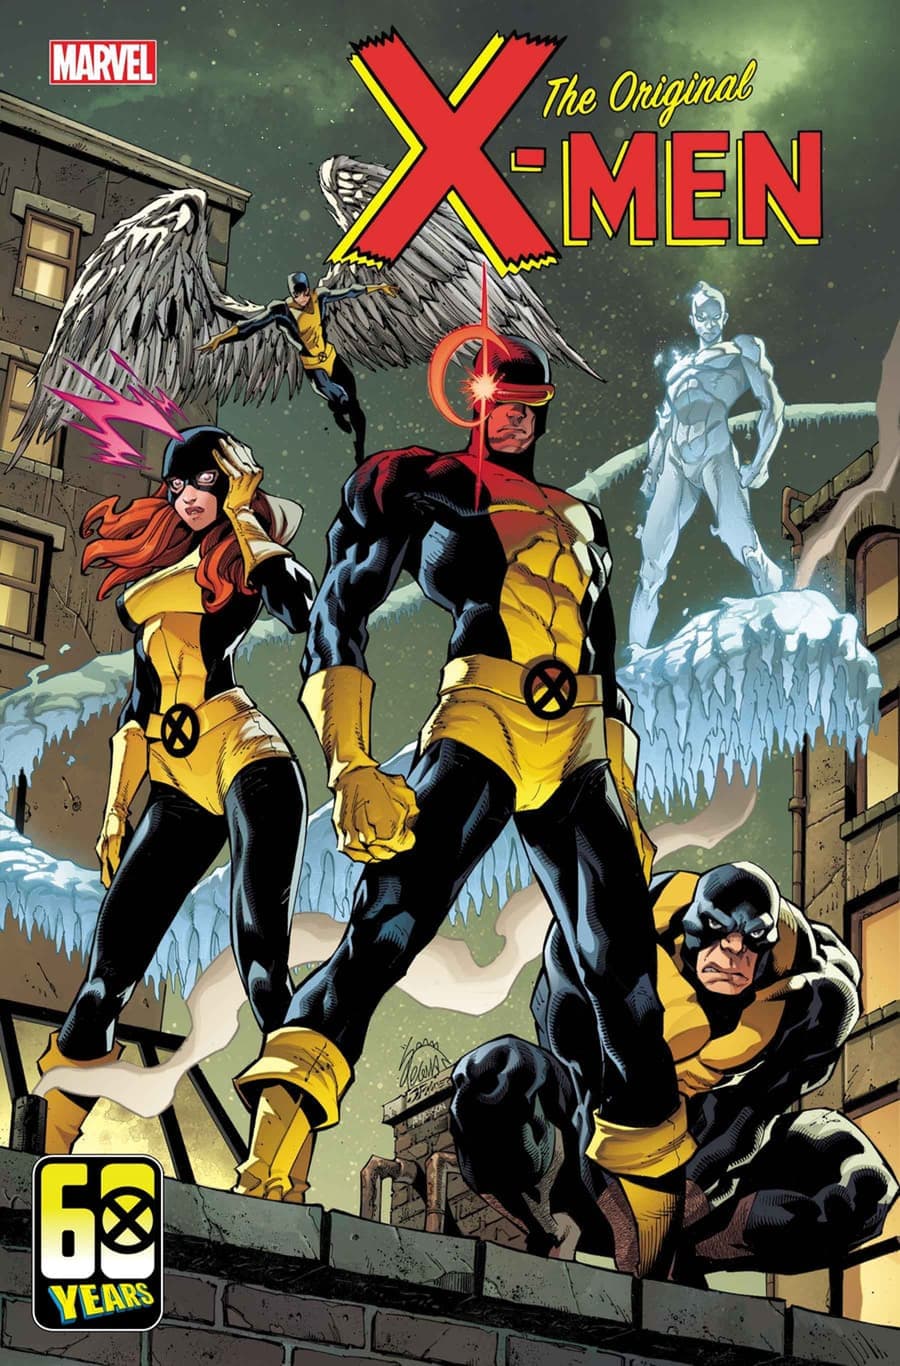 ORIGINAL X-MEN (2023) #1 cover by Ryan Stegman